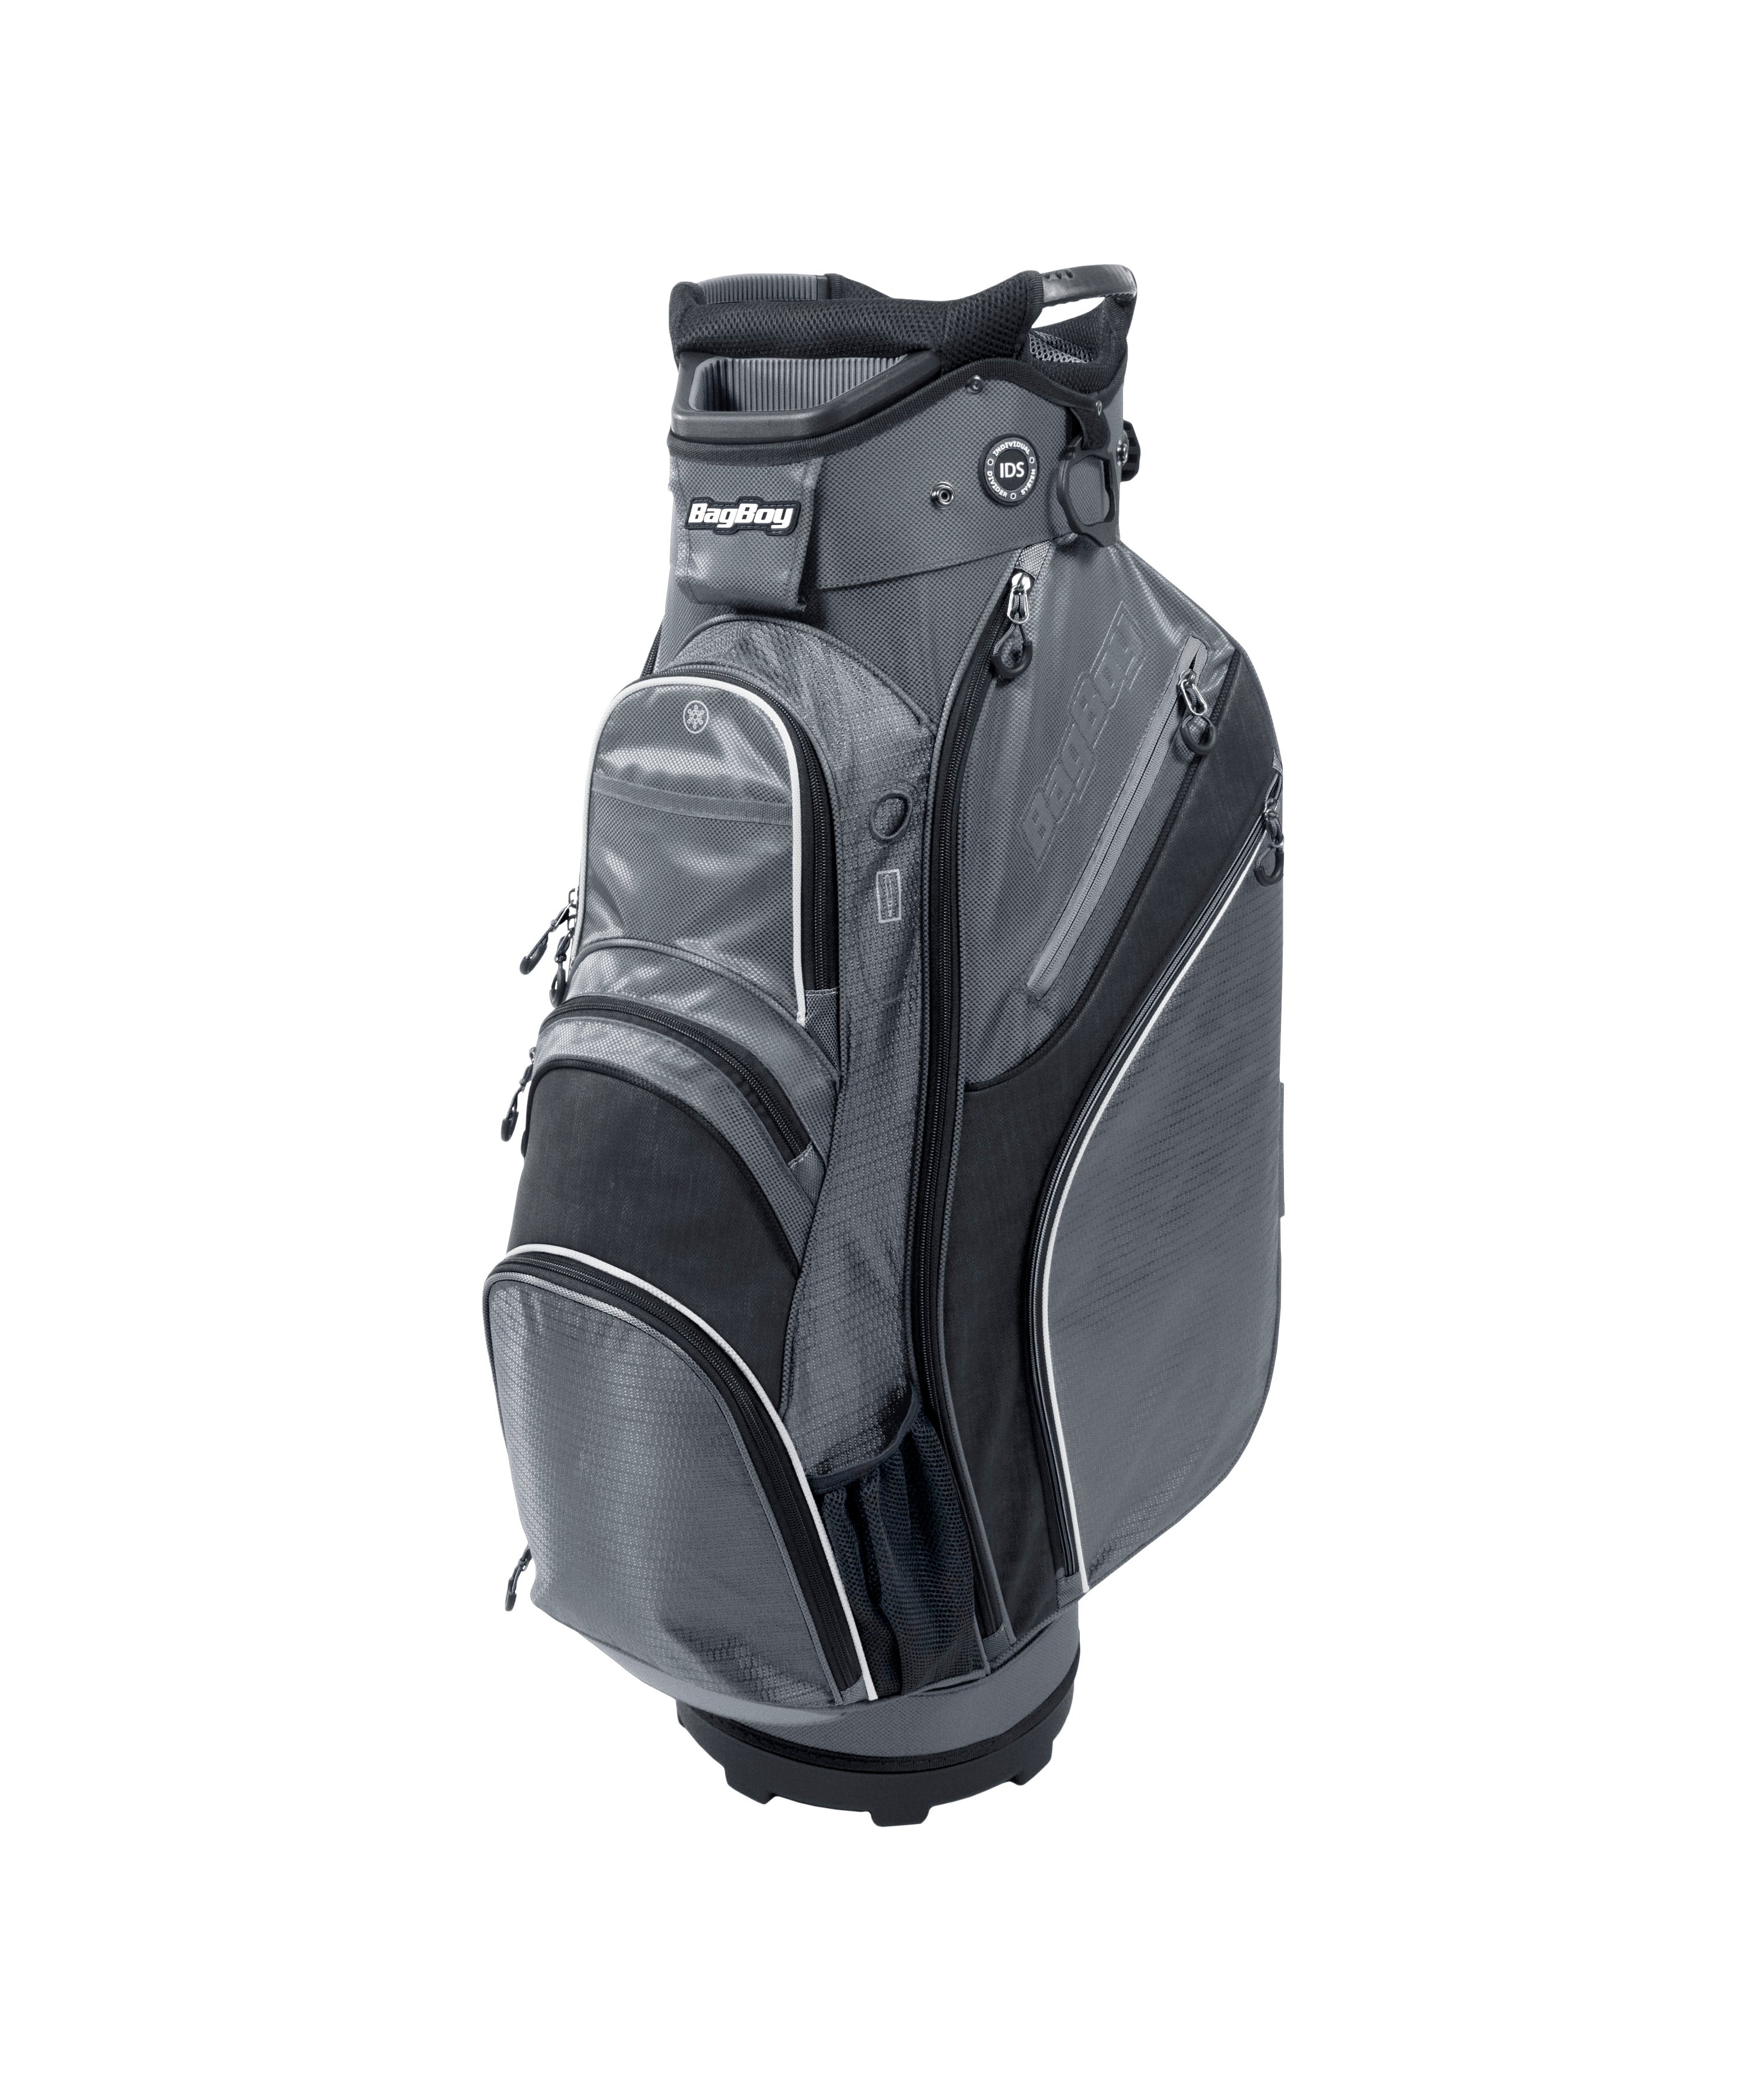 Bag Boy Chiller Cart Bag， Charcoal/Black/White， One Size-